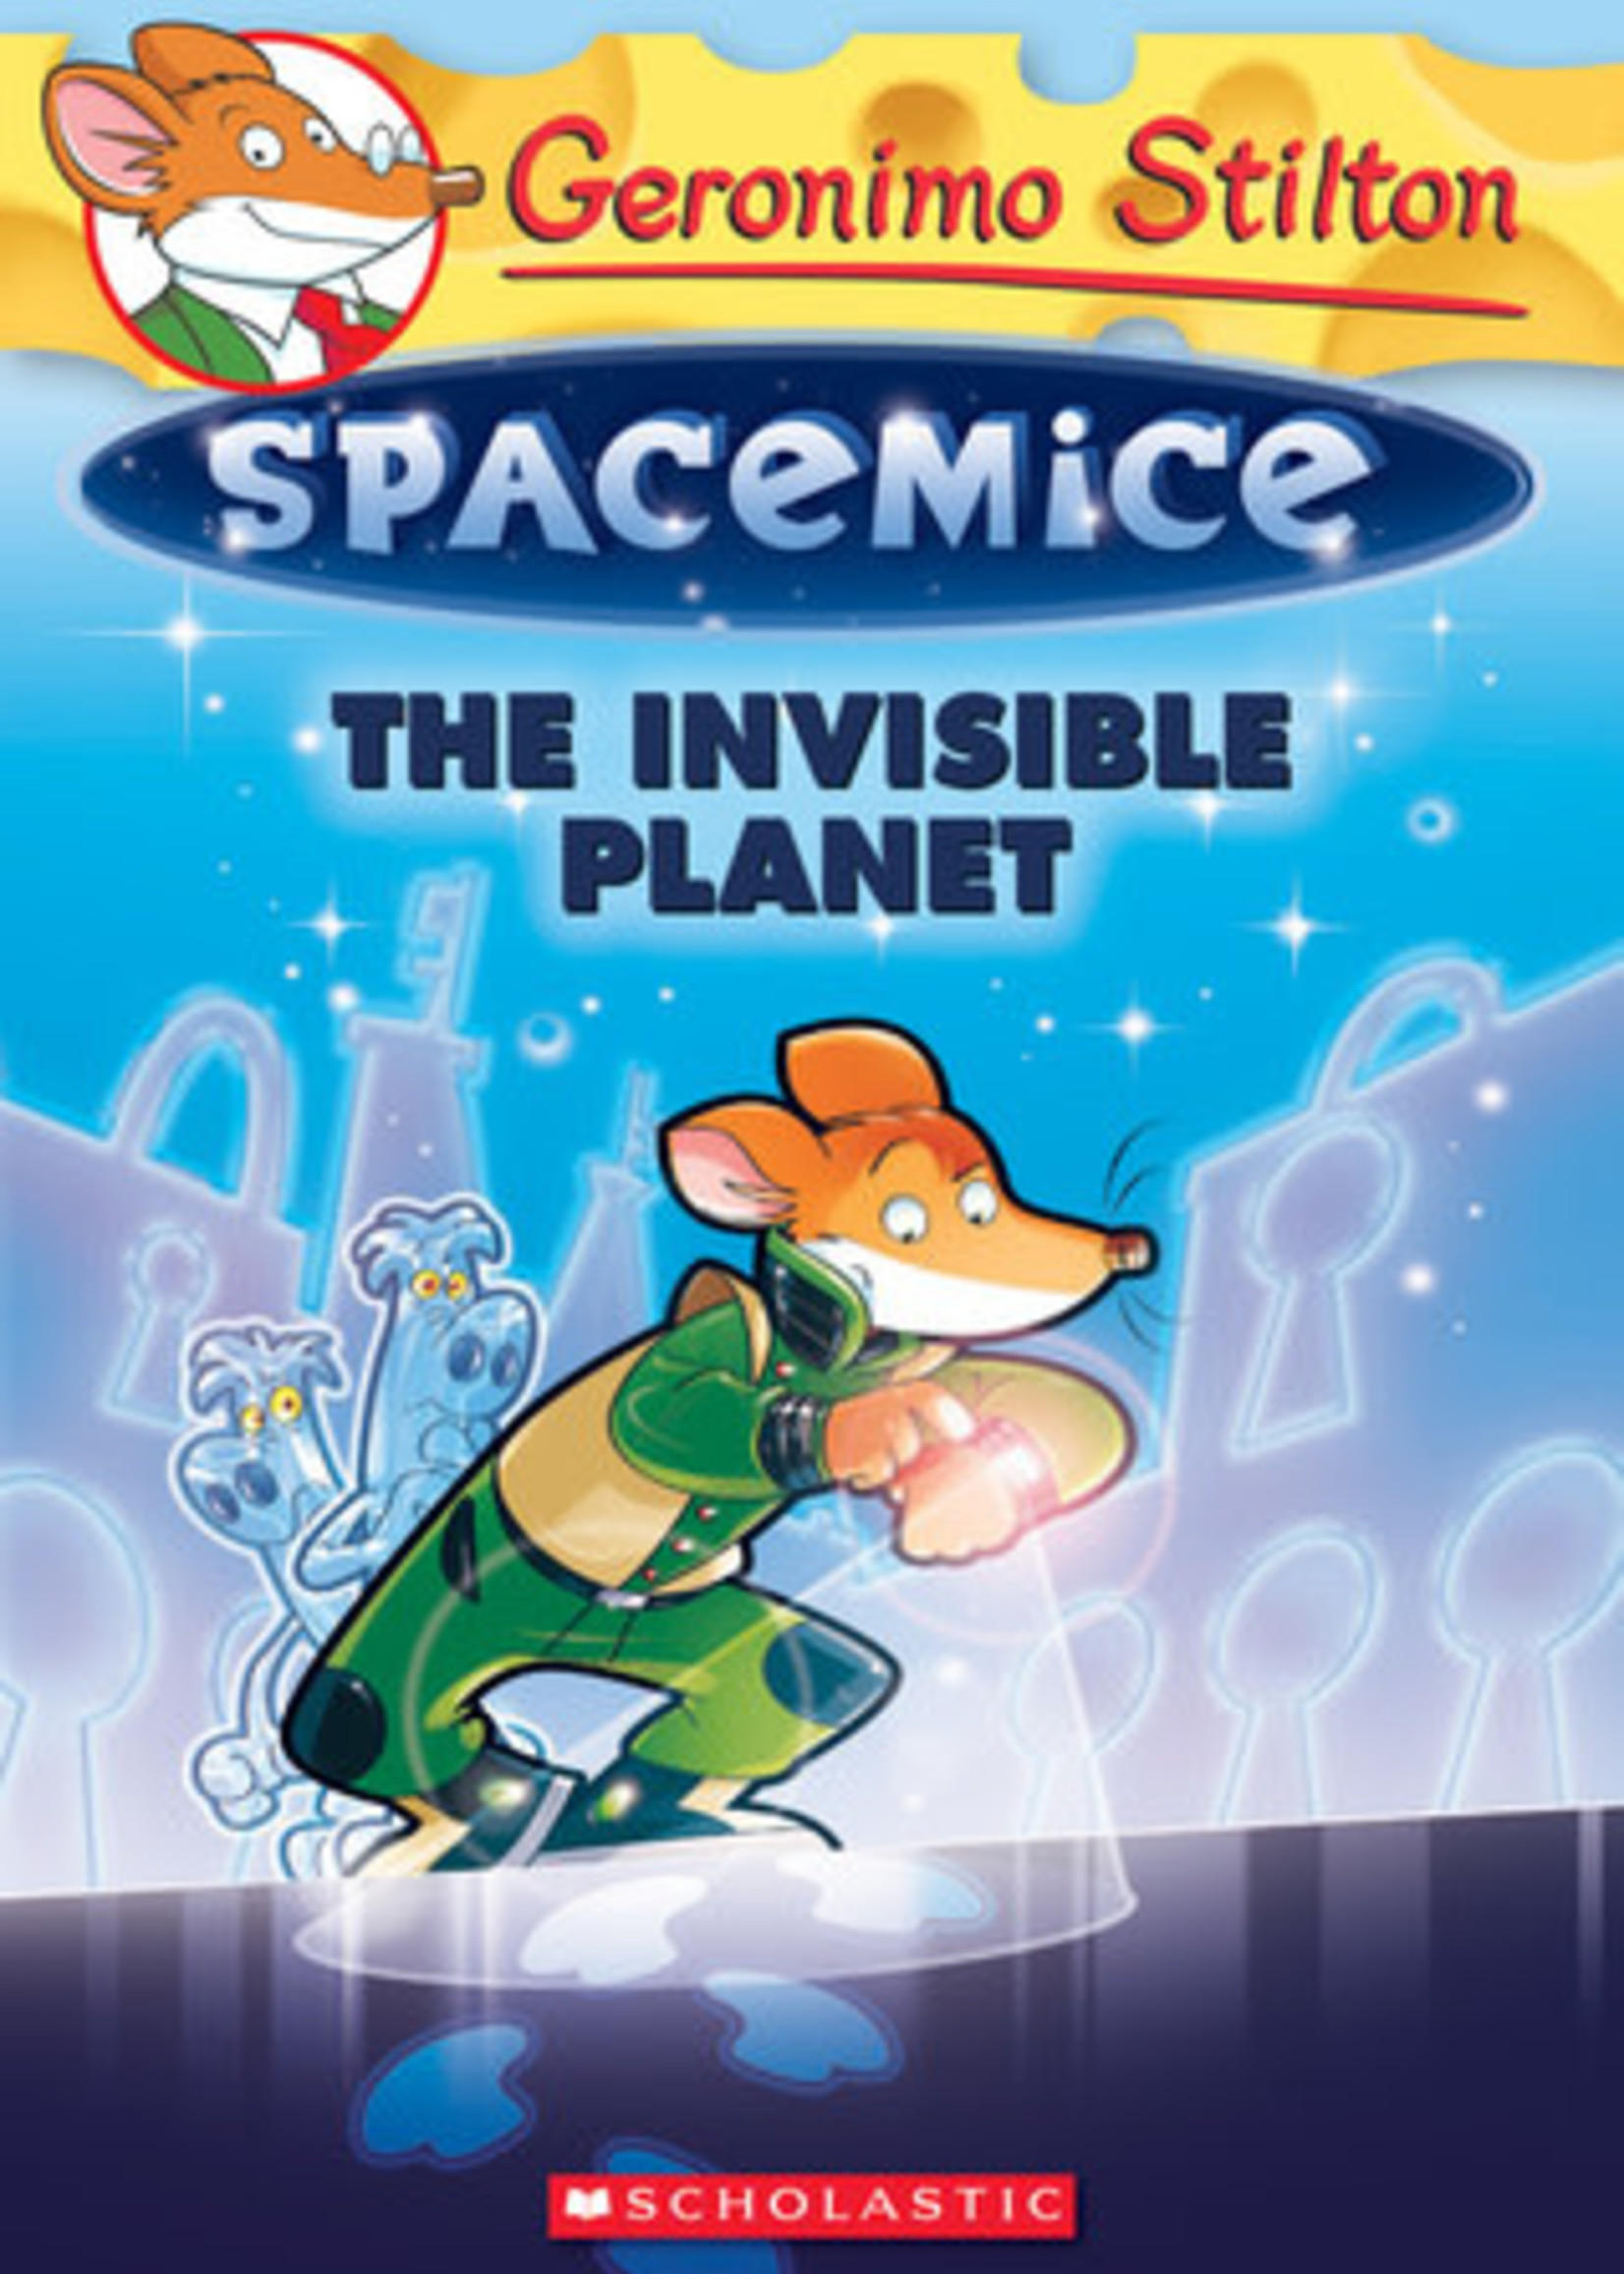 The Invisible Planet (Geronimo Stilton Spacemice #12) by Geronimo Stilton